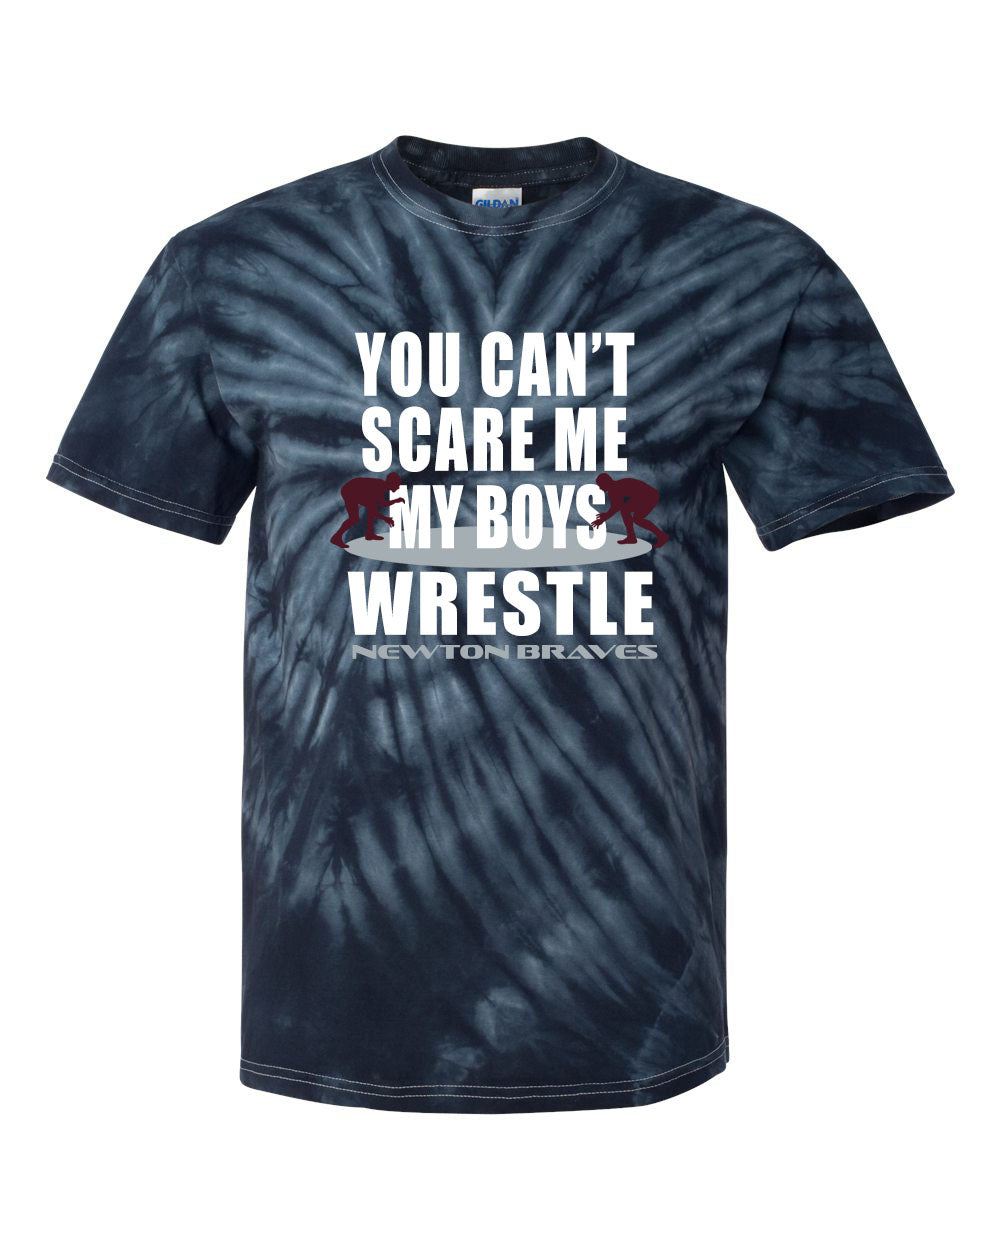 Newton Wrestling Tie Dye t-shirt Design 11